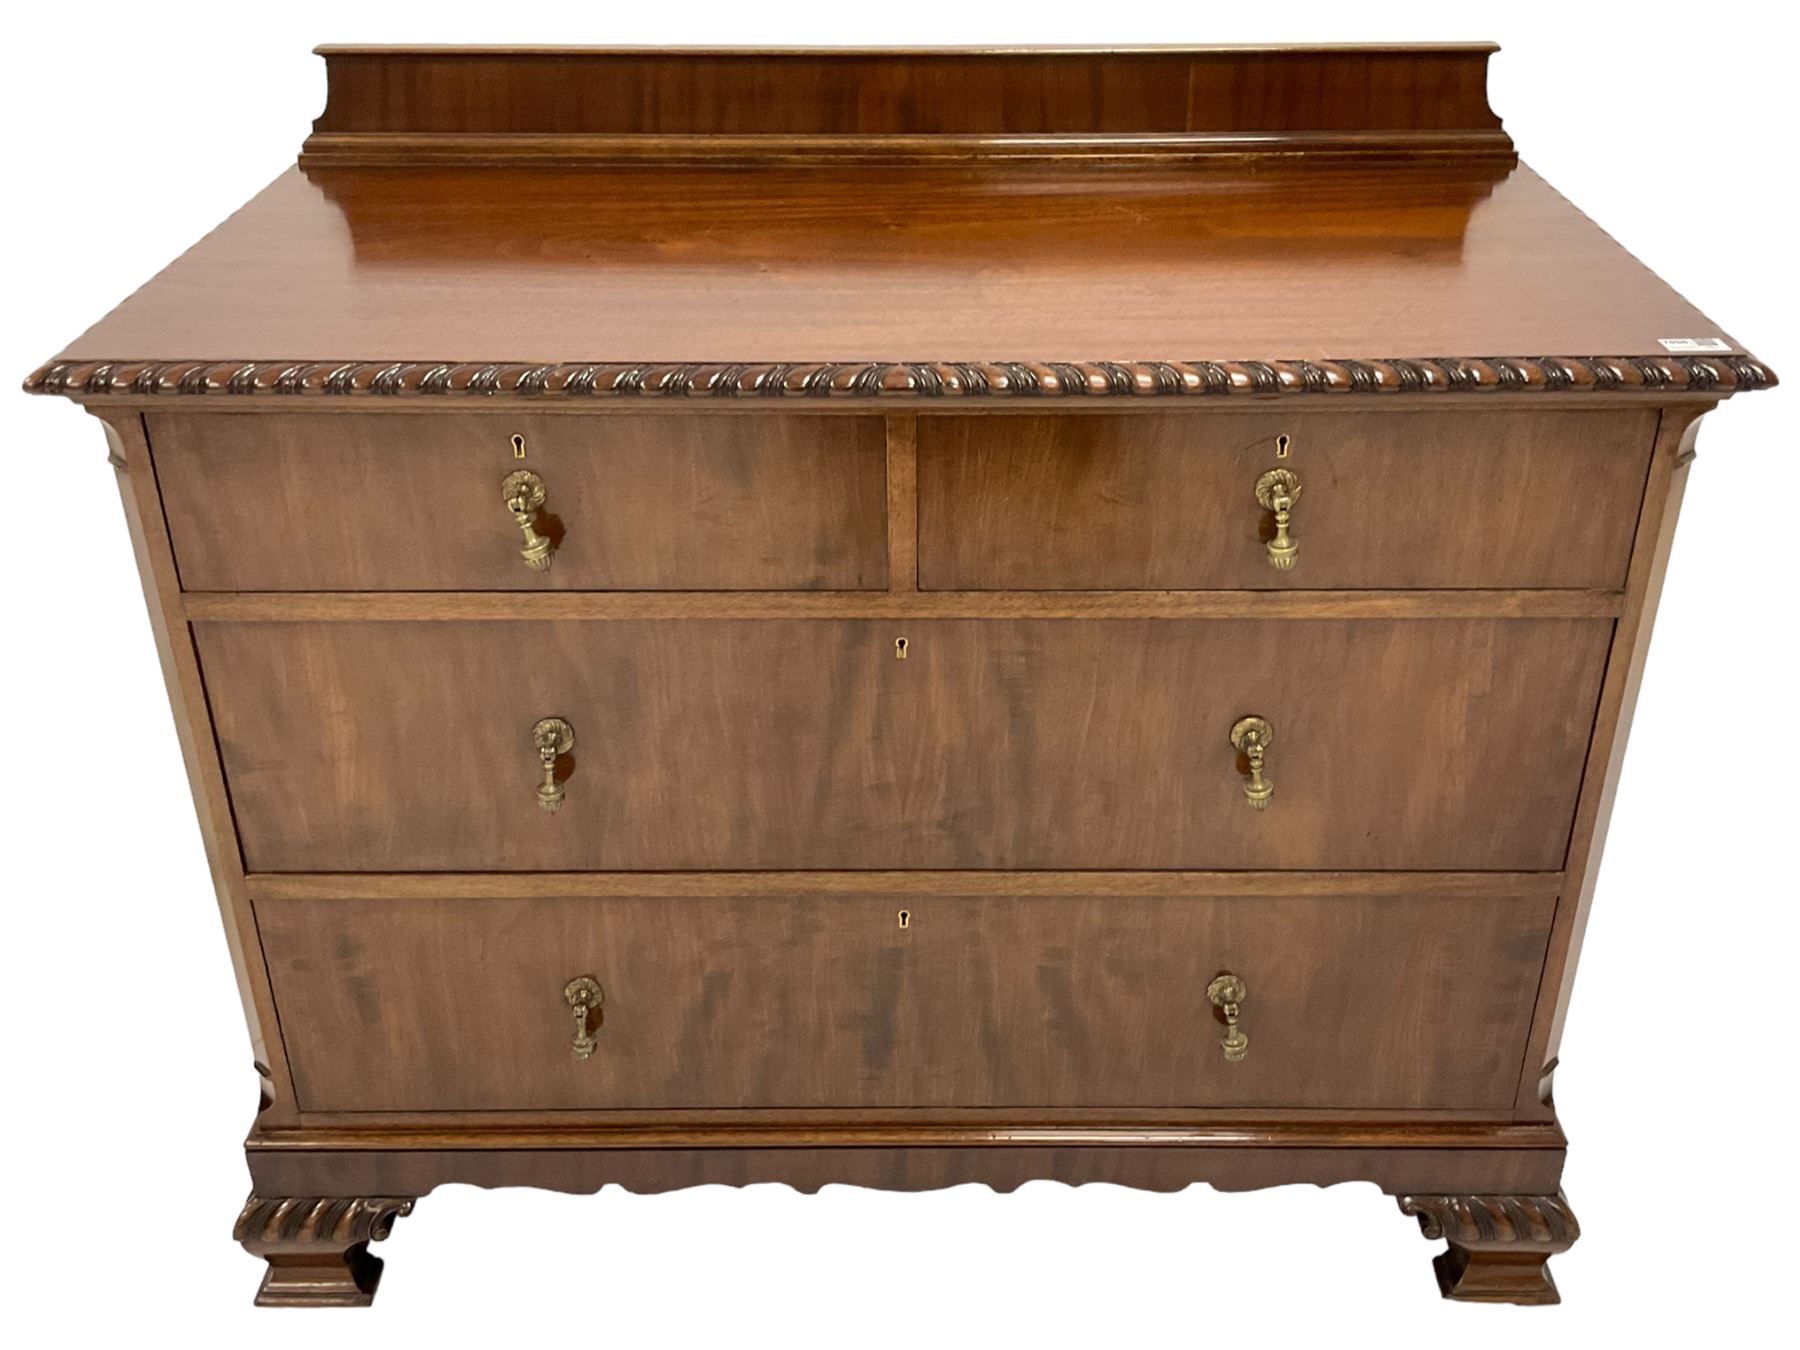 Mid-20th century mahogany linen chest - Image 6 of 7